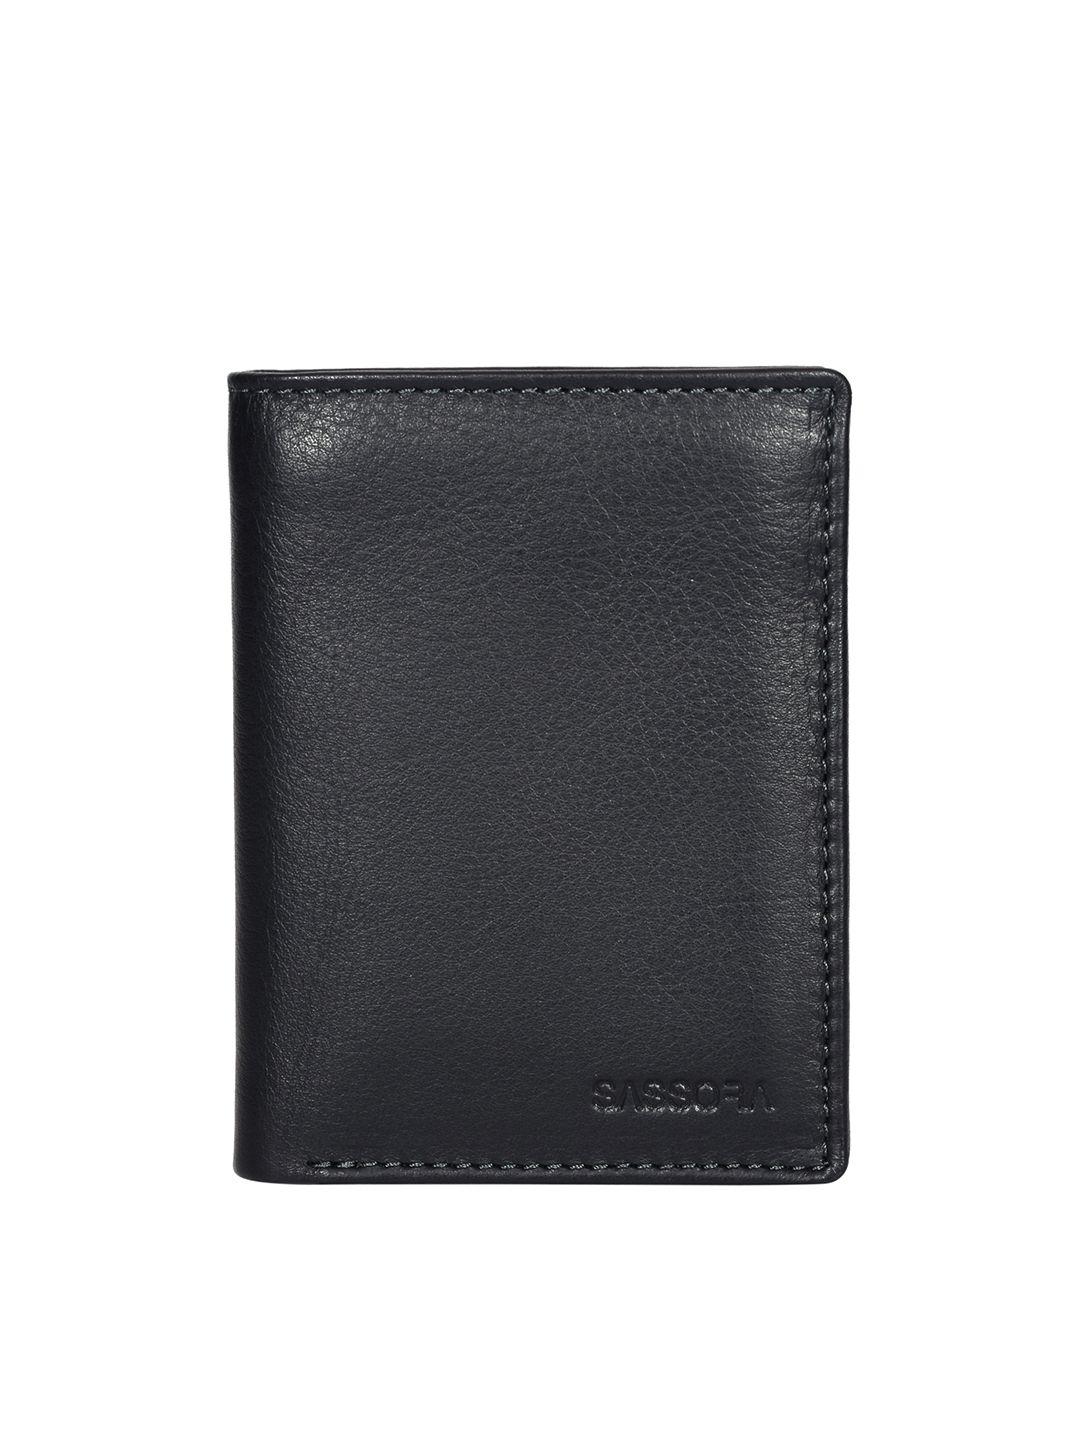 sassora unisex leather two fold wallet